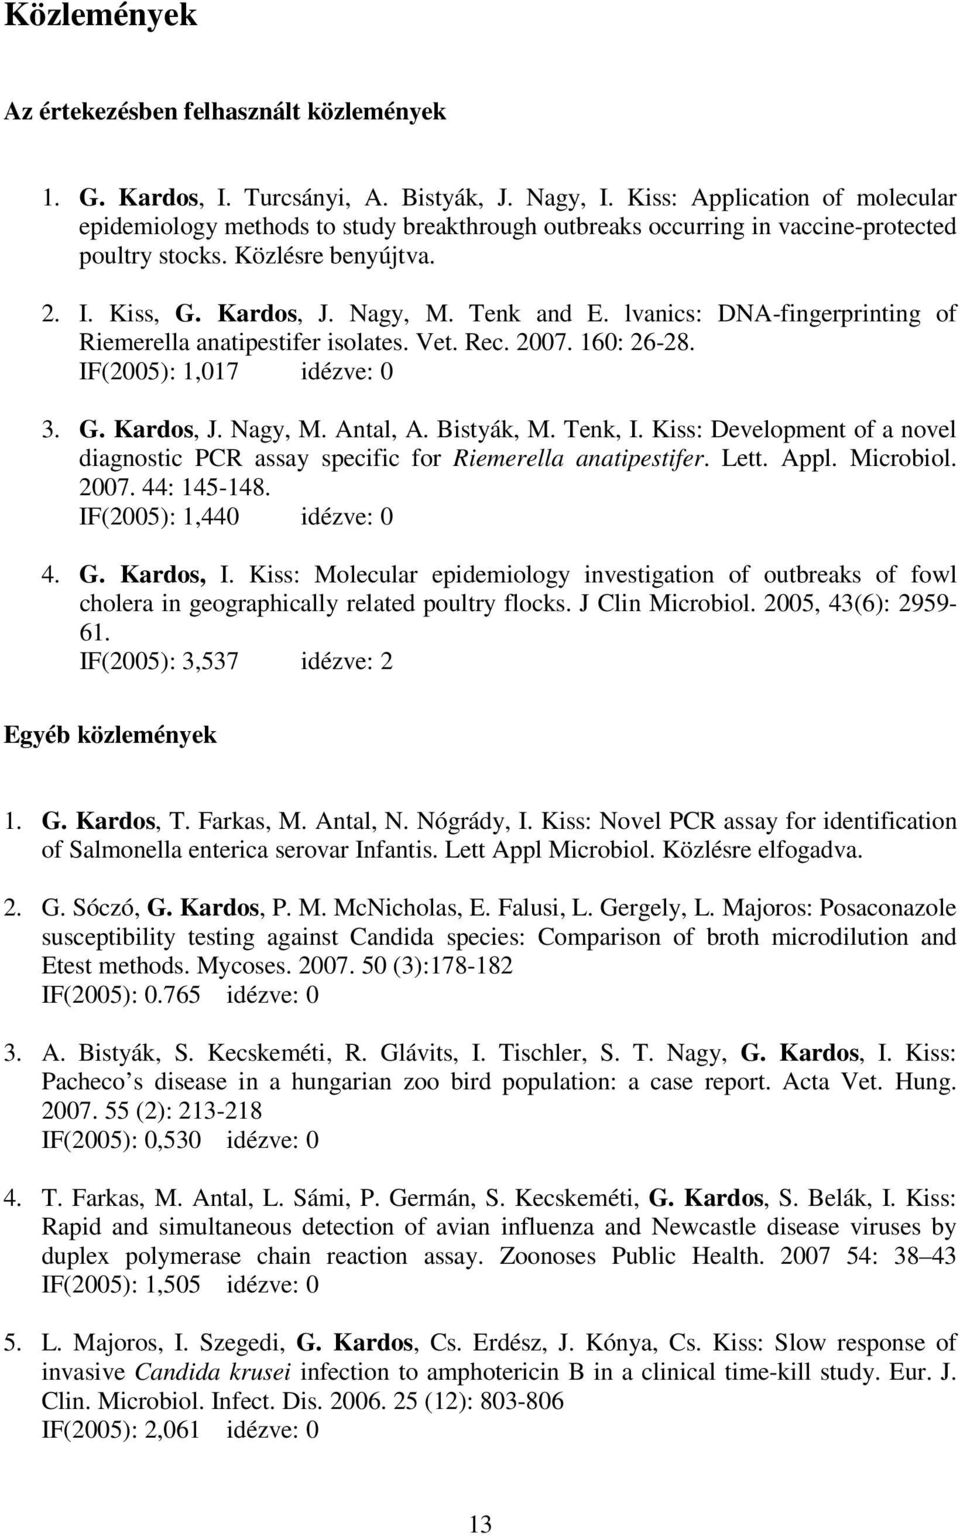 lvanics: DNA-fingerprinting of Riemerella anatipestifer isolates. Vet. Rec. 2007. 160: 26-28. IF(2005): 1,017 idézve: 0 3. G. Kardos, J. Nagy, M. Antal, A. Bistyák, M. Tenk, I.